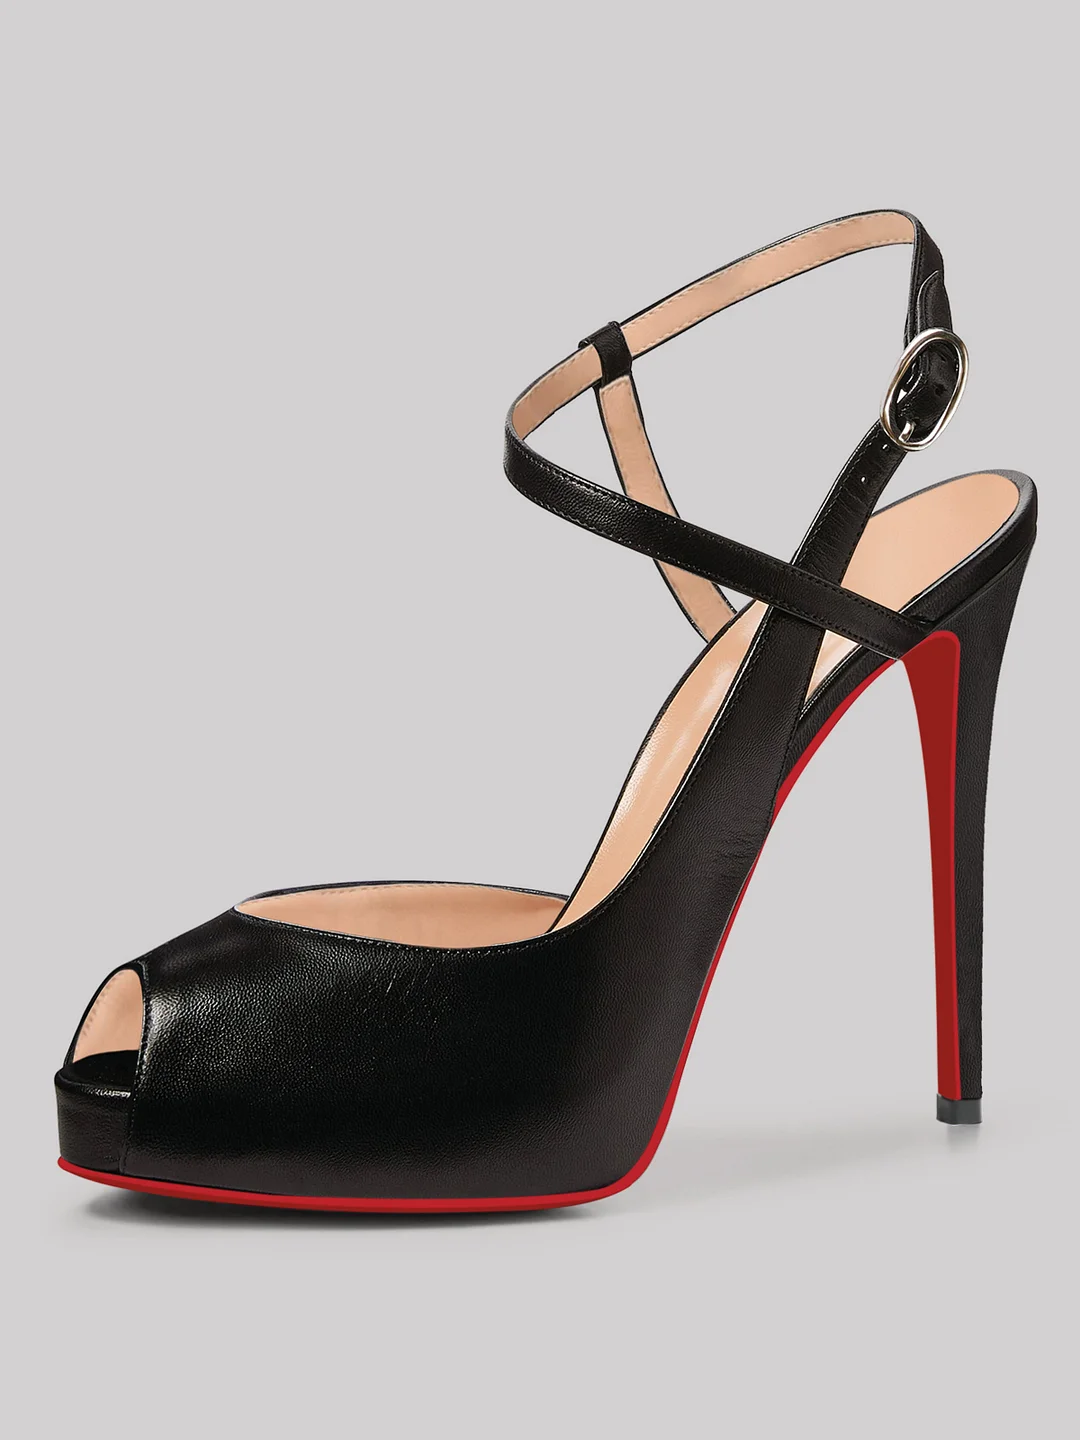 120mm Women's Stiletto High Heels Open Toe Sandals Red Bottom Platform So Jenlove Shoes